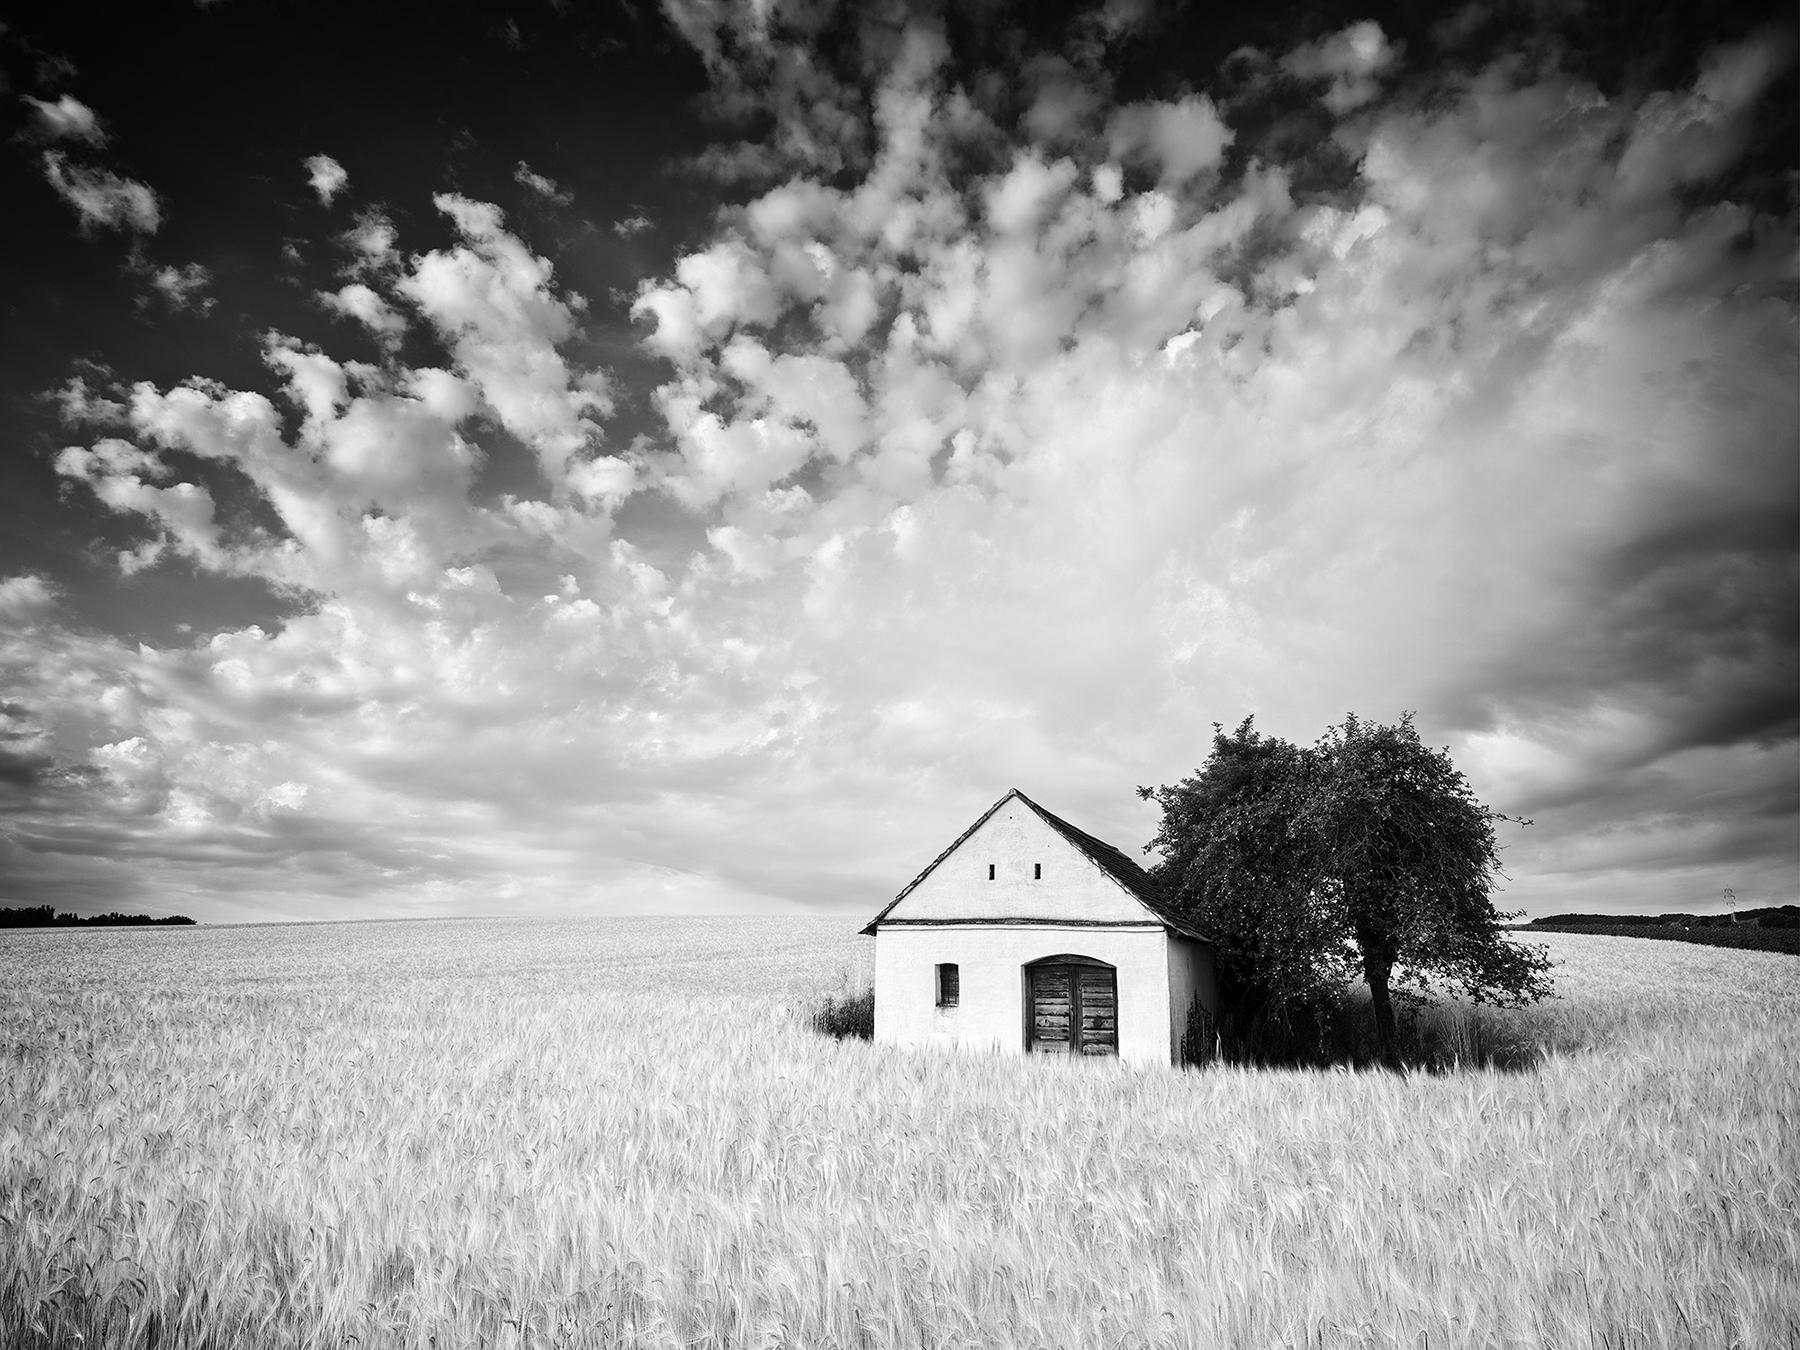 Gerald Berghammer Landscape Photograph - Wine Press House, Cornfield, Tree, black and white landscape art photography 